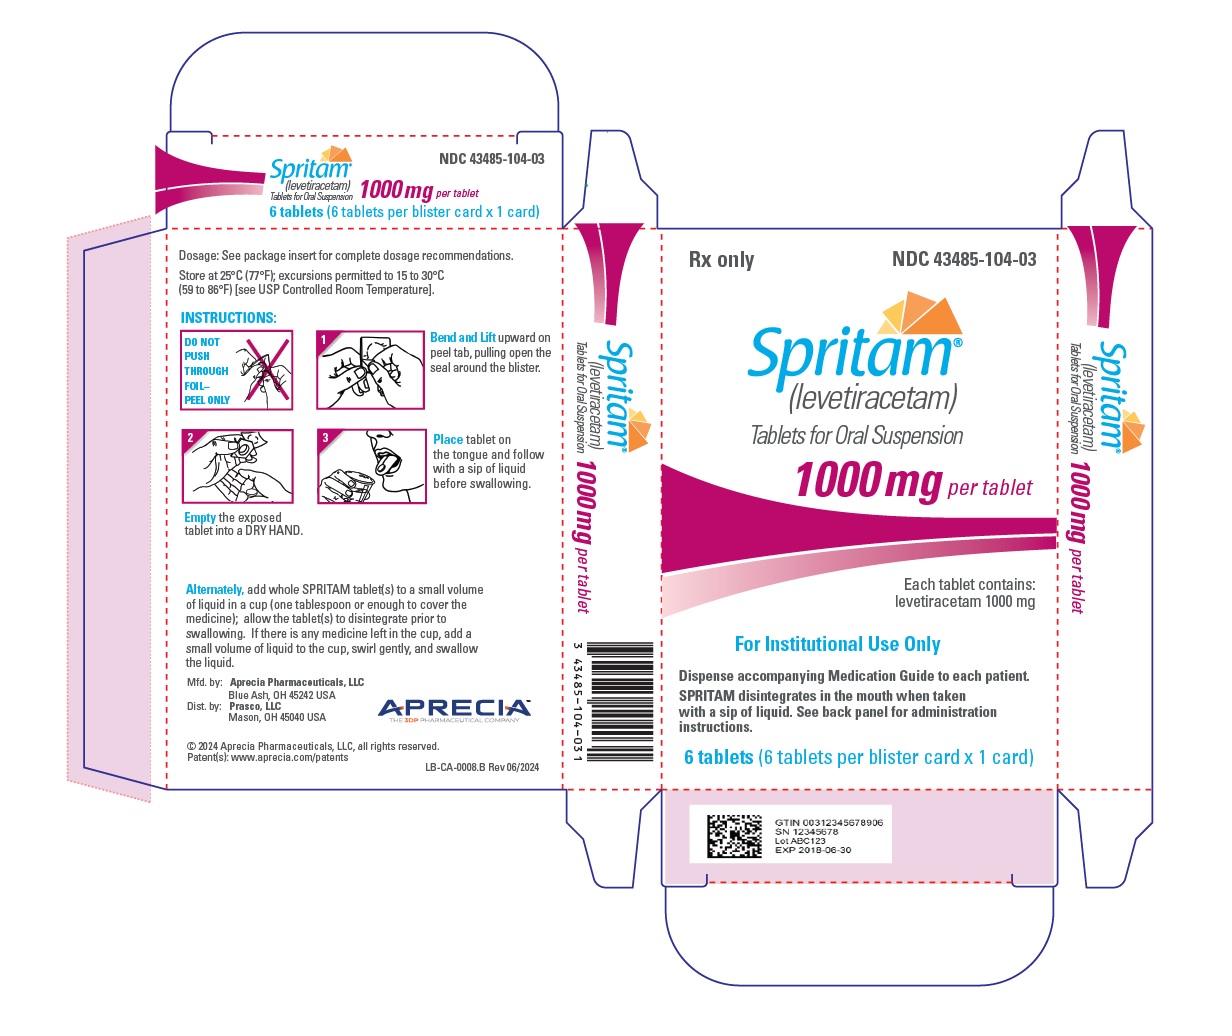 1000 mg Carton Label